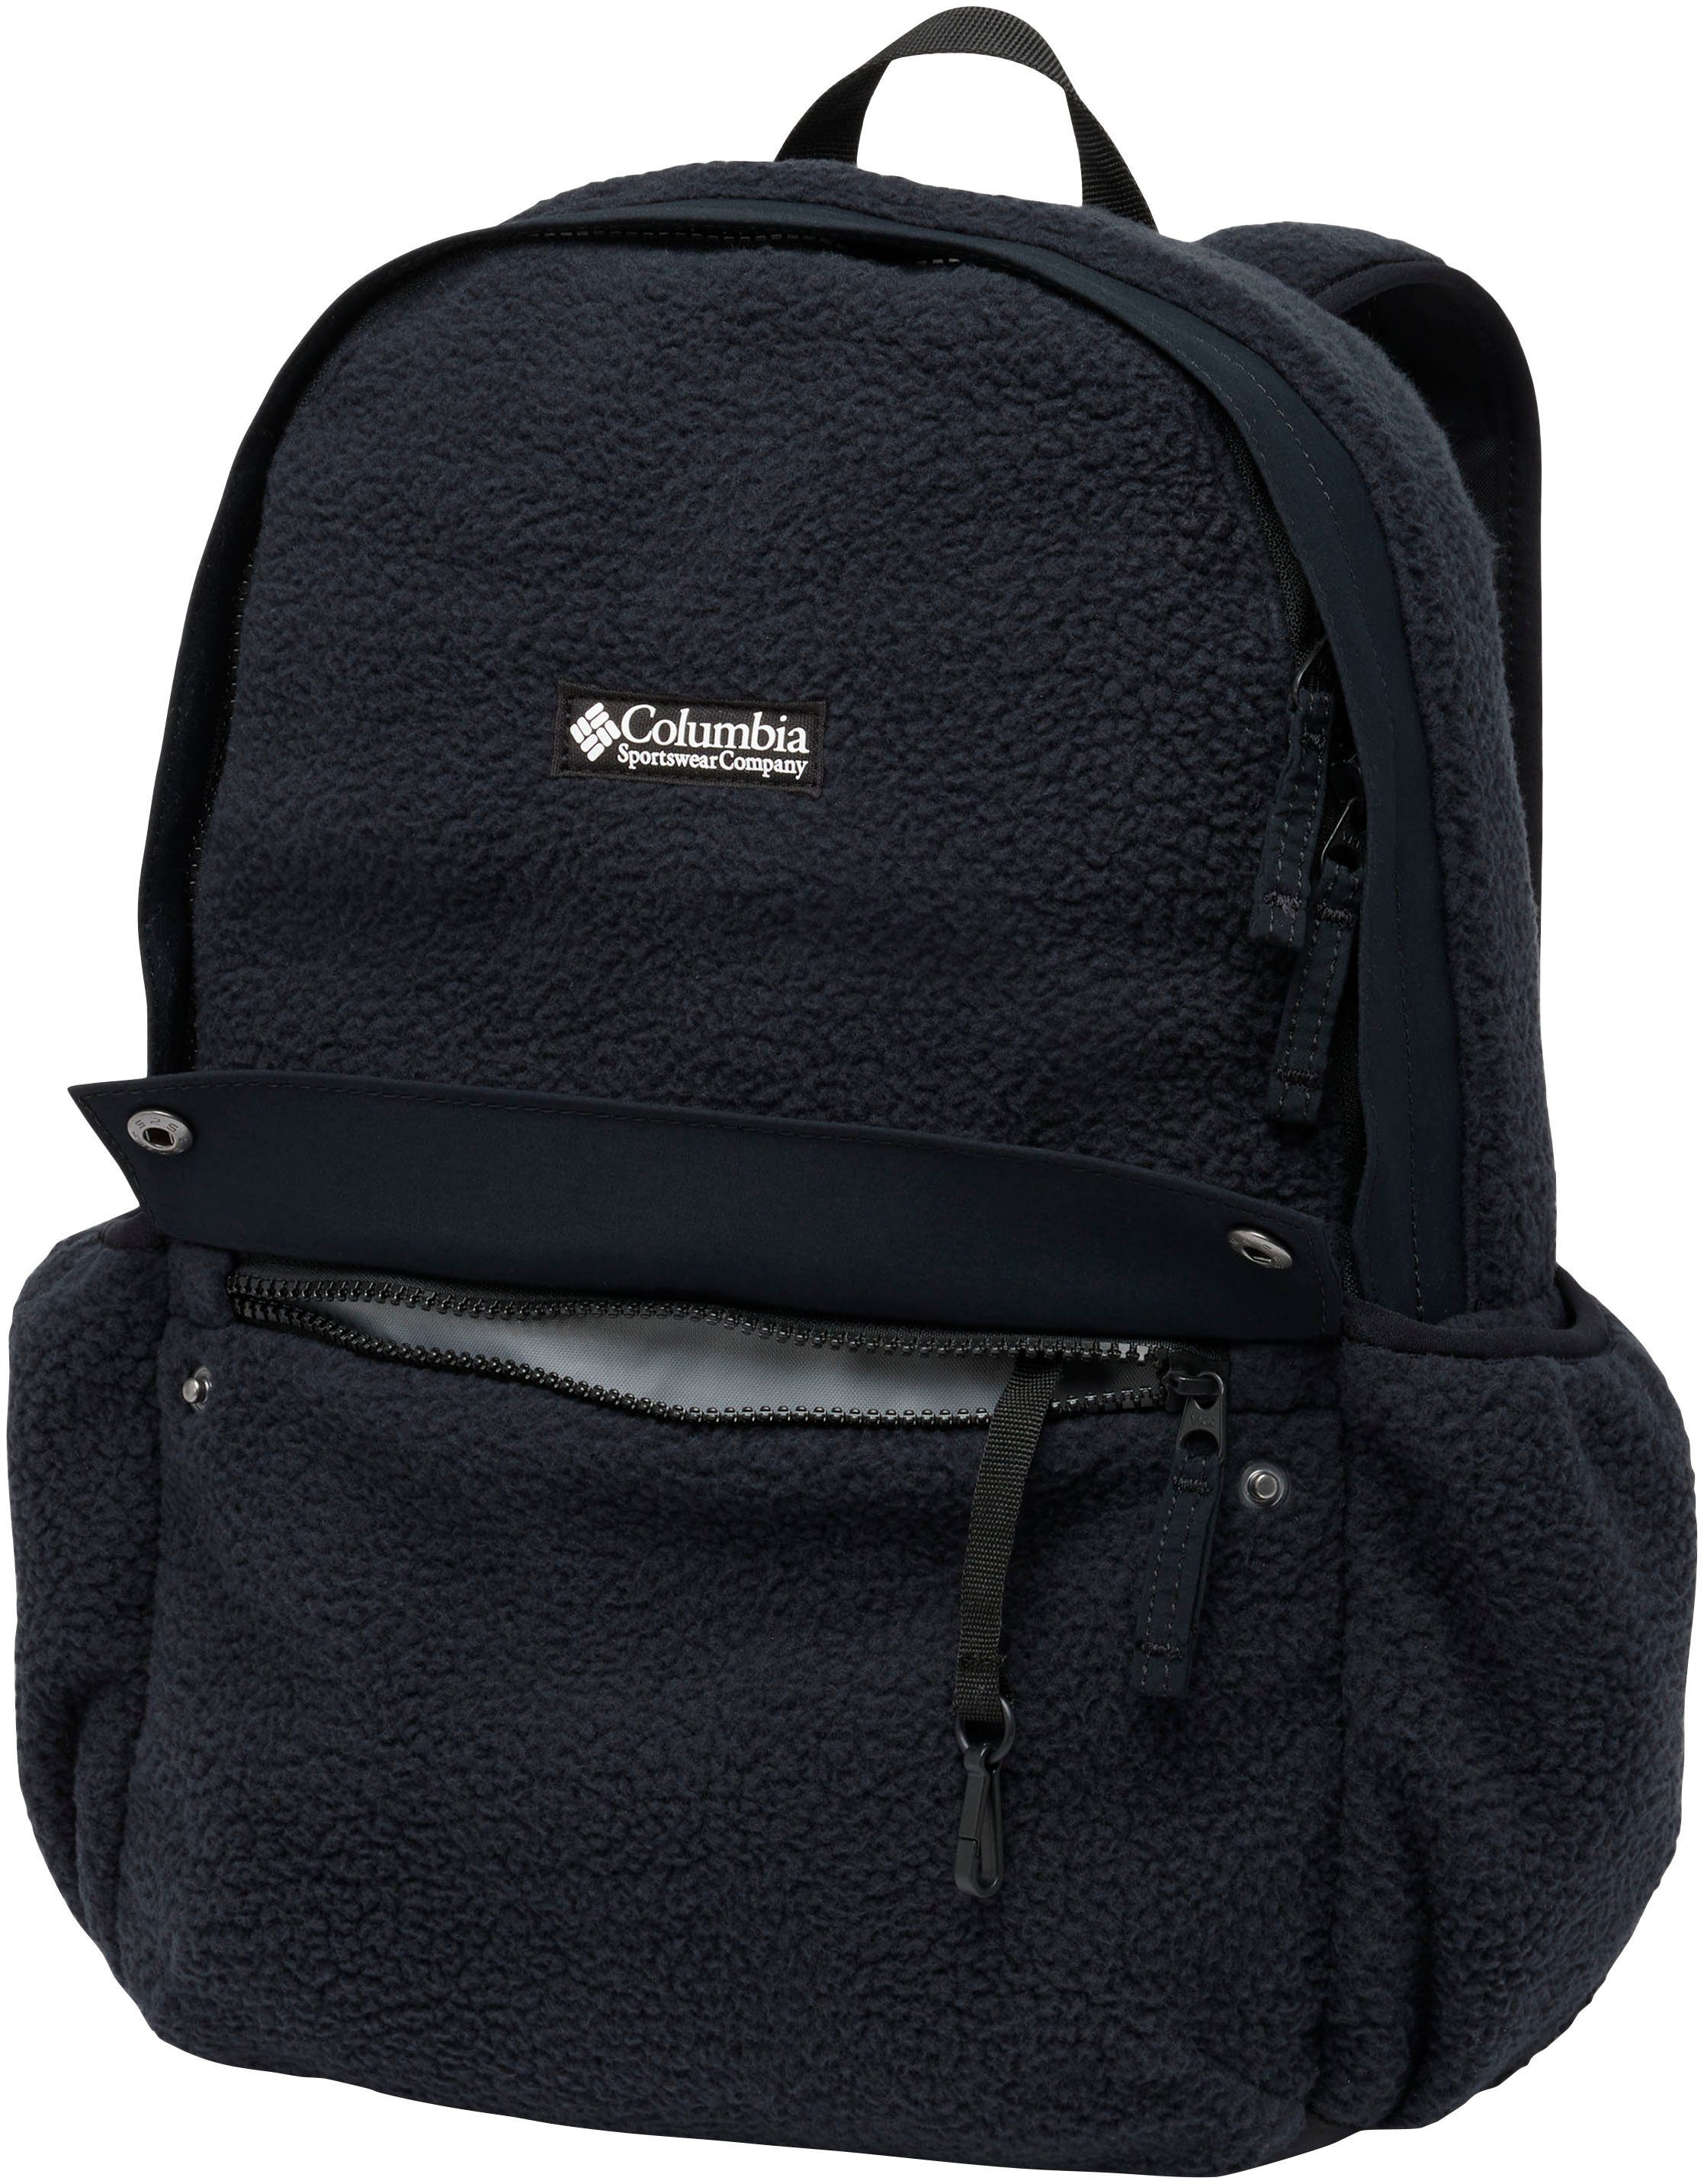 Black Backpack Columbia Rucksack Helvetia 14L